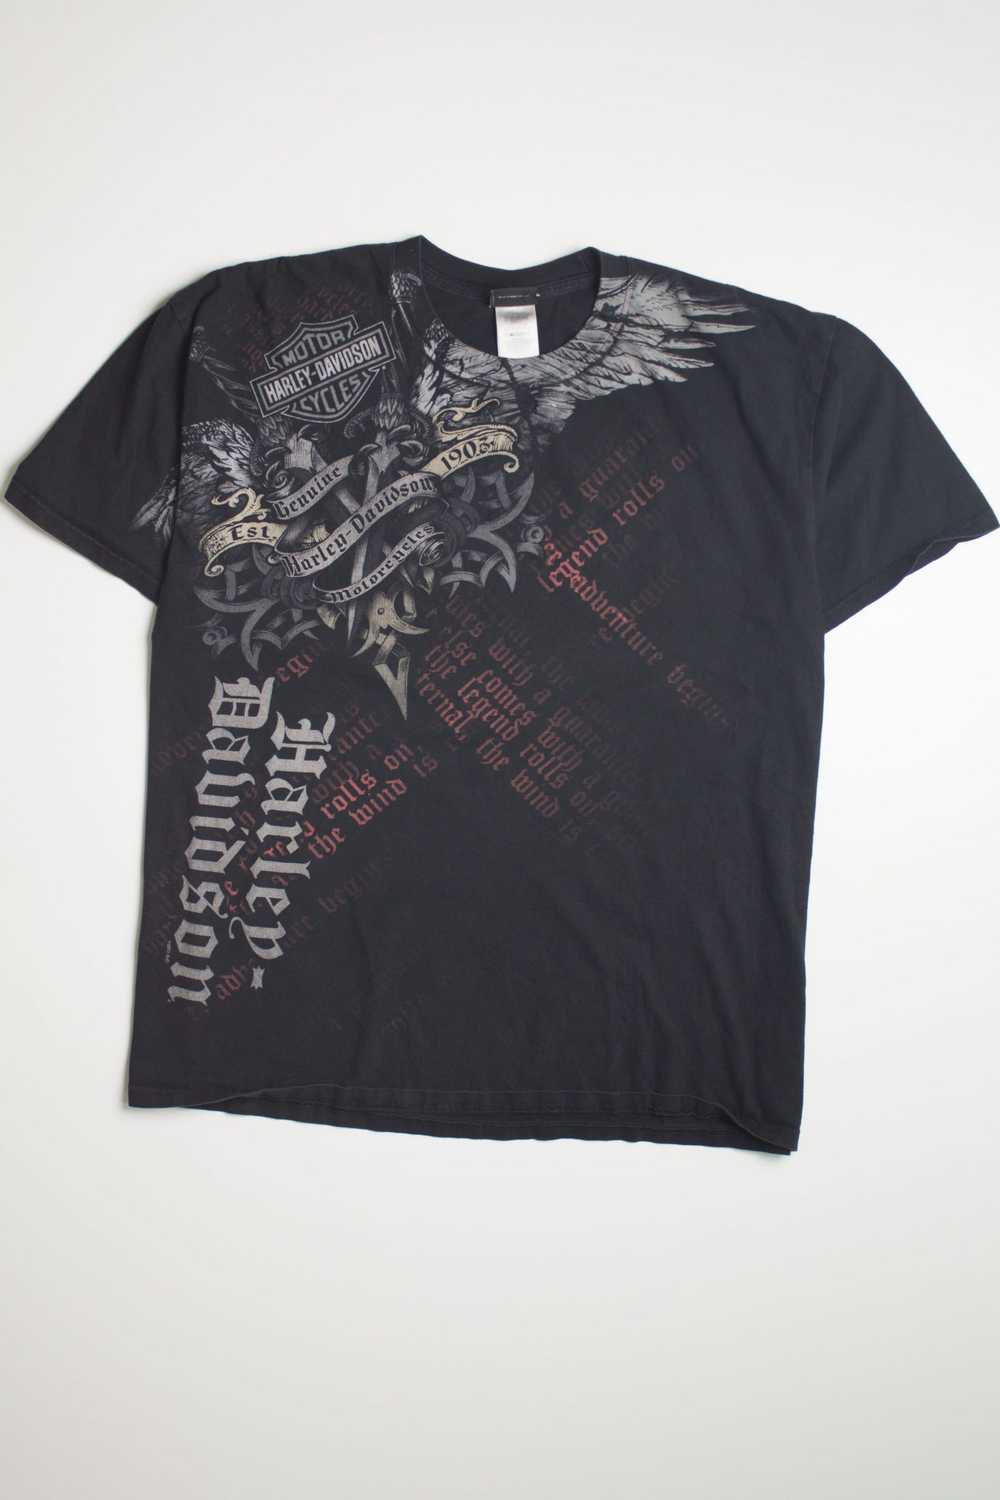 Alamo City Longhorn Skull Harley Davidson T-Shirt - image 4